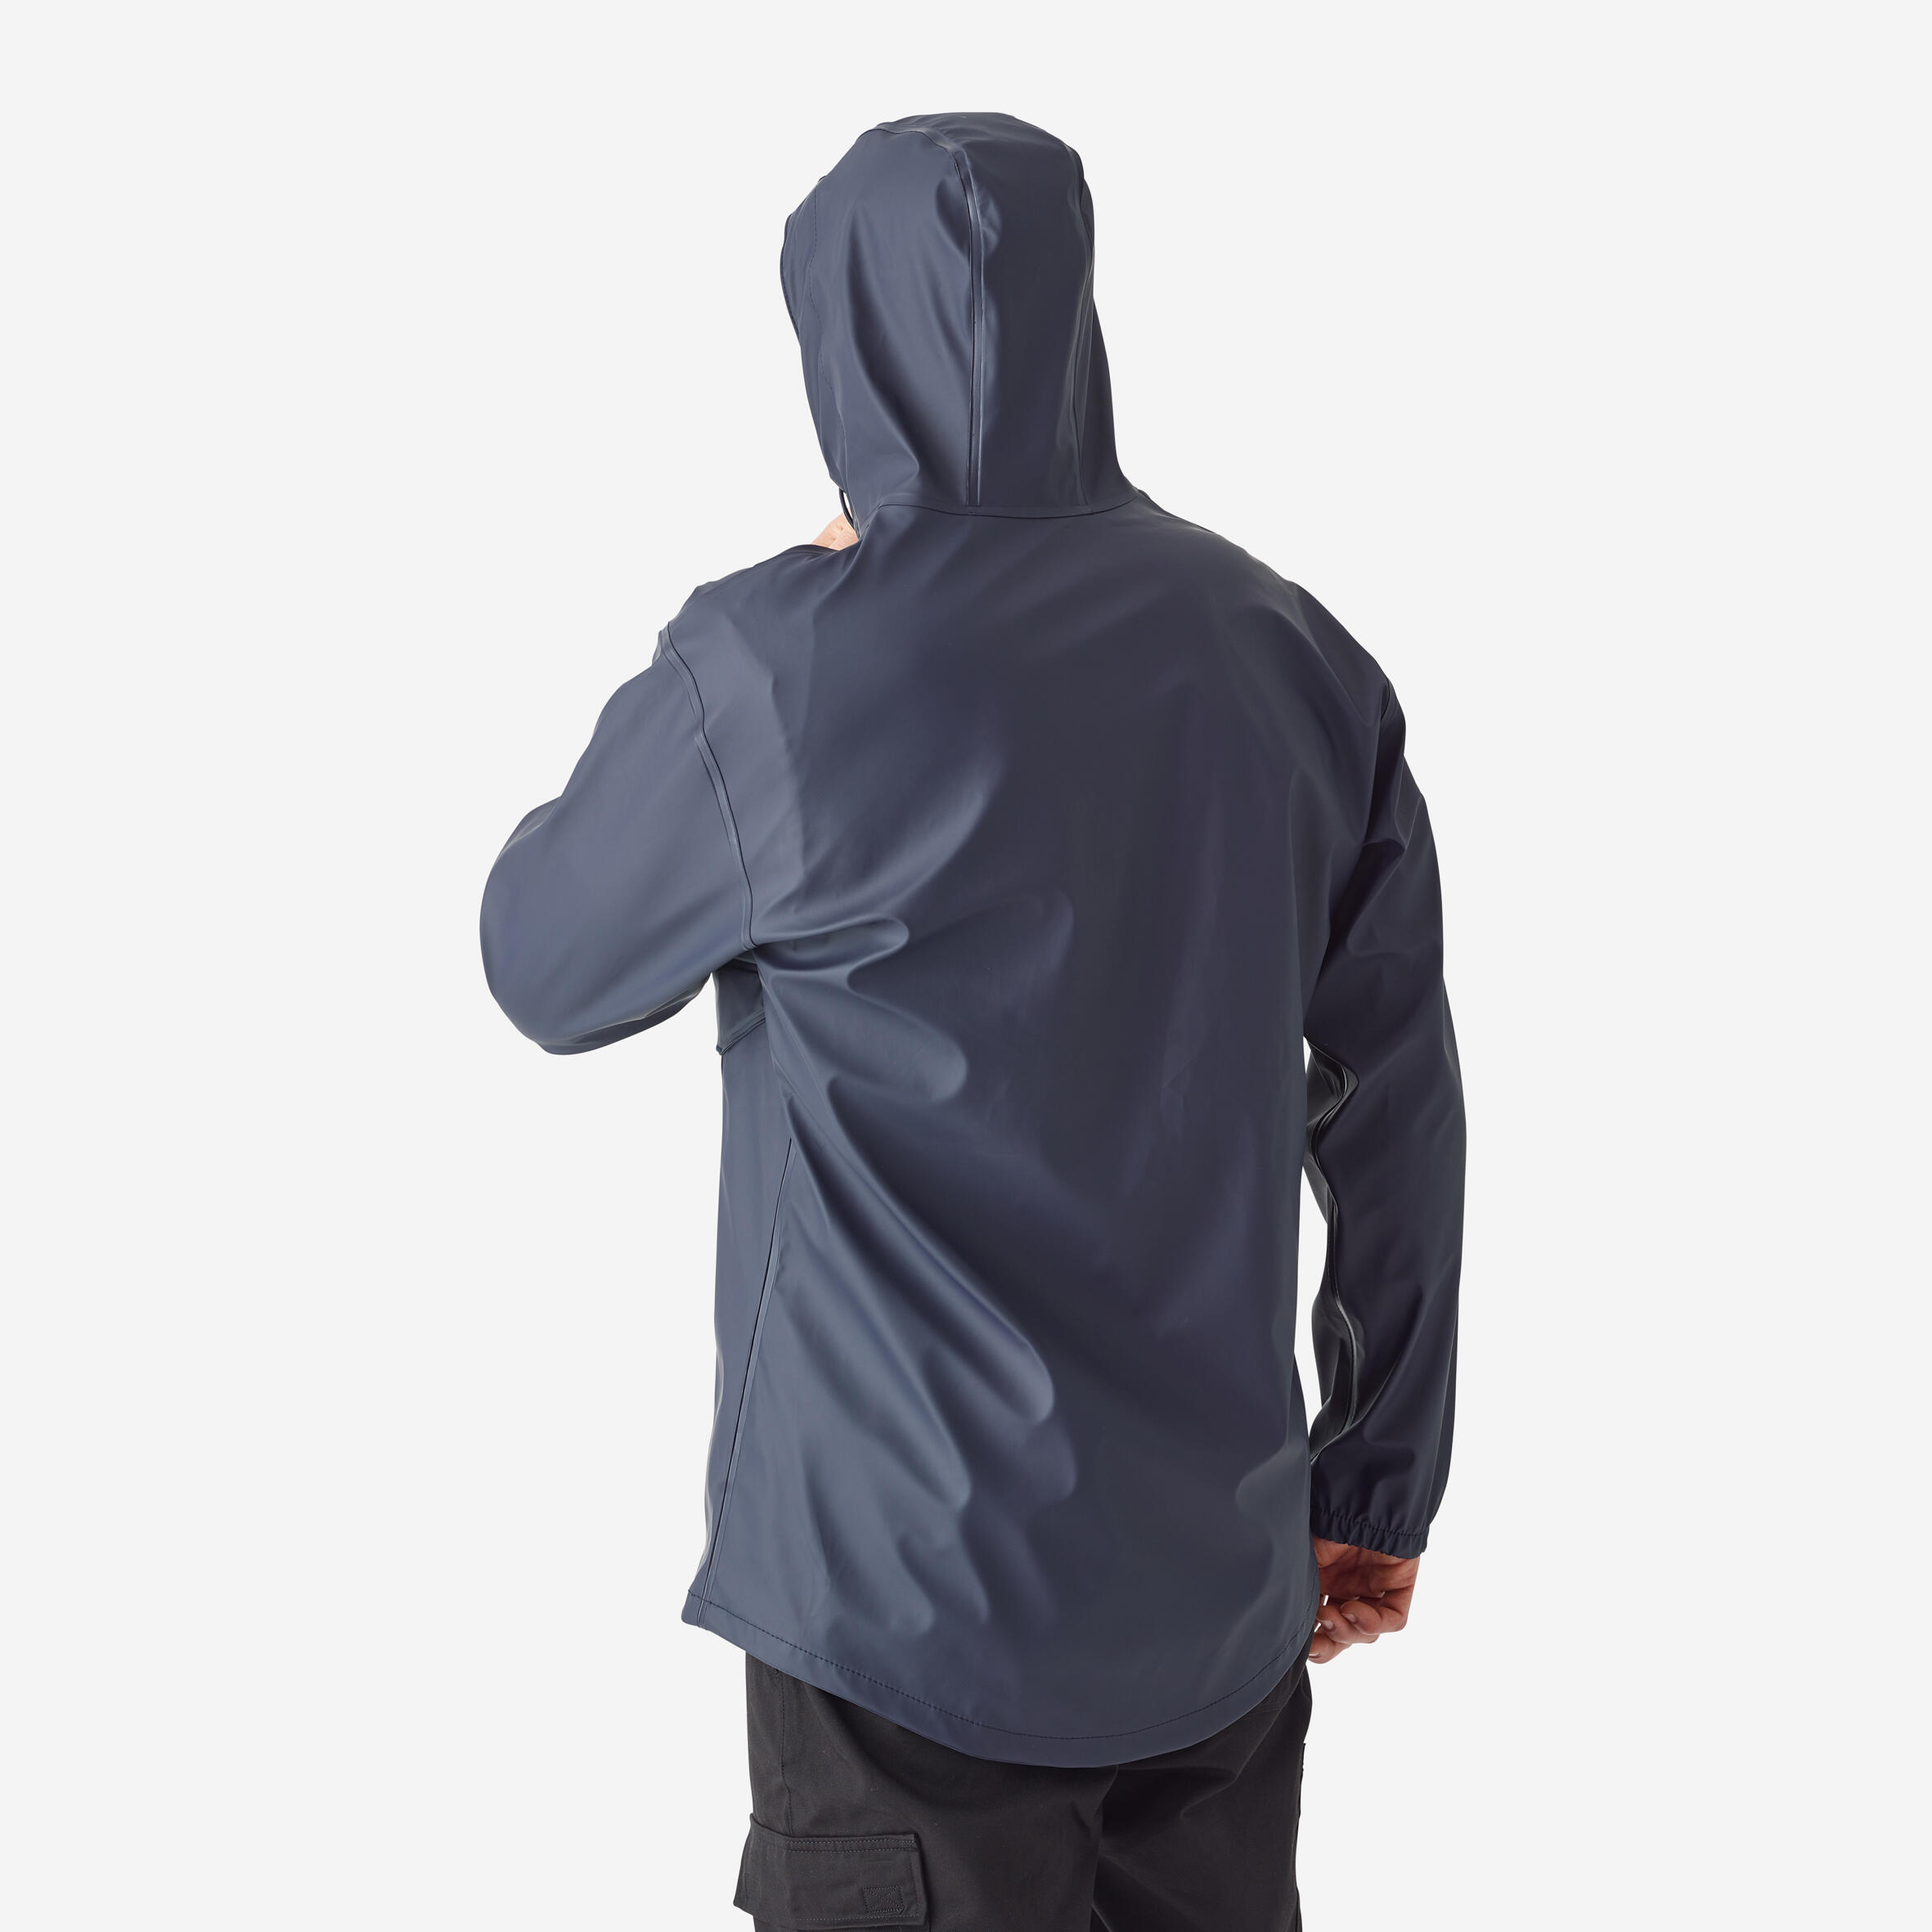 Fishing waterproof poncho/jacket - FP 500 blue 2/5